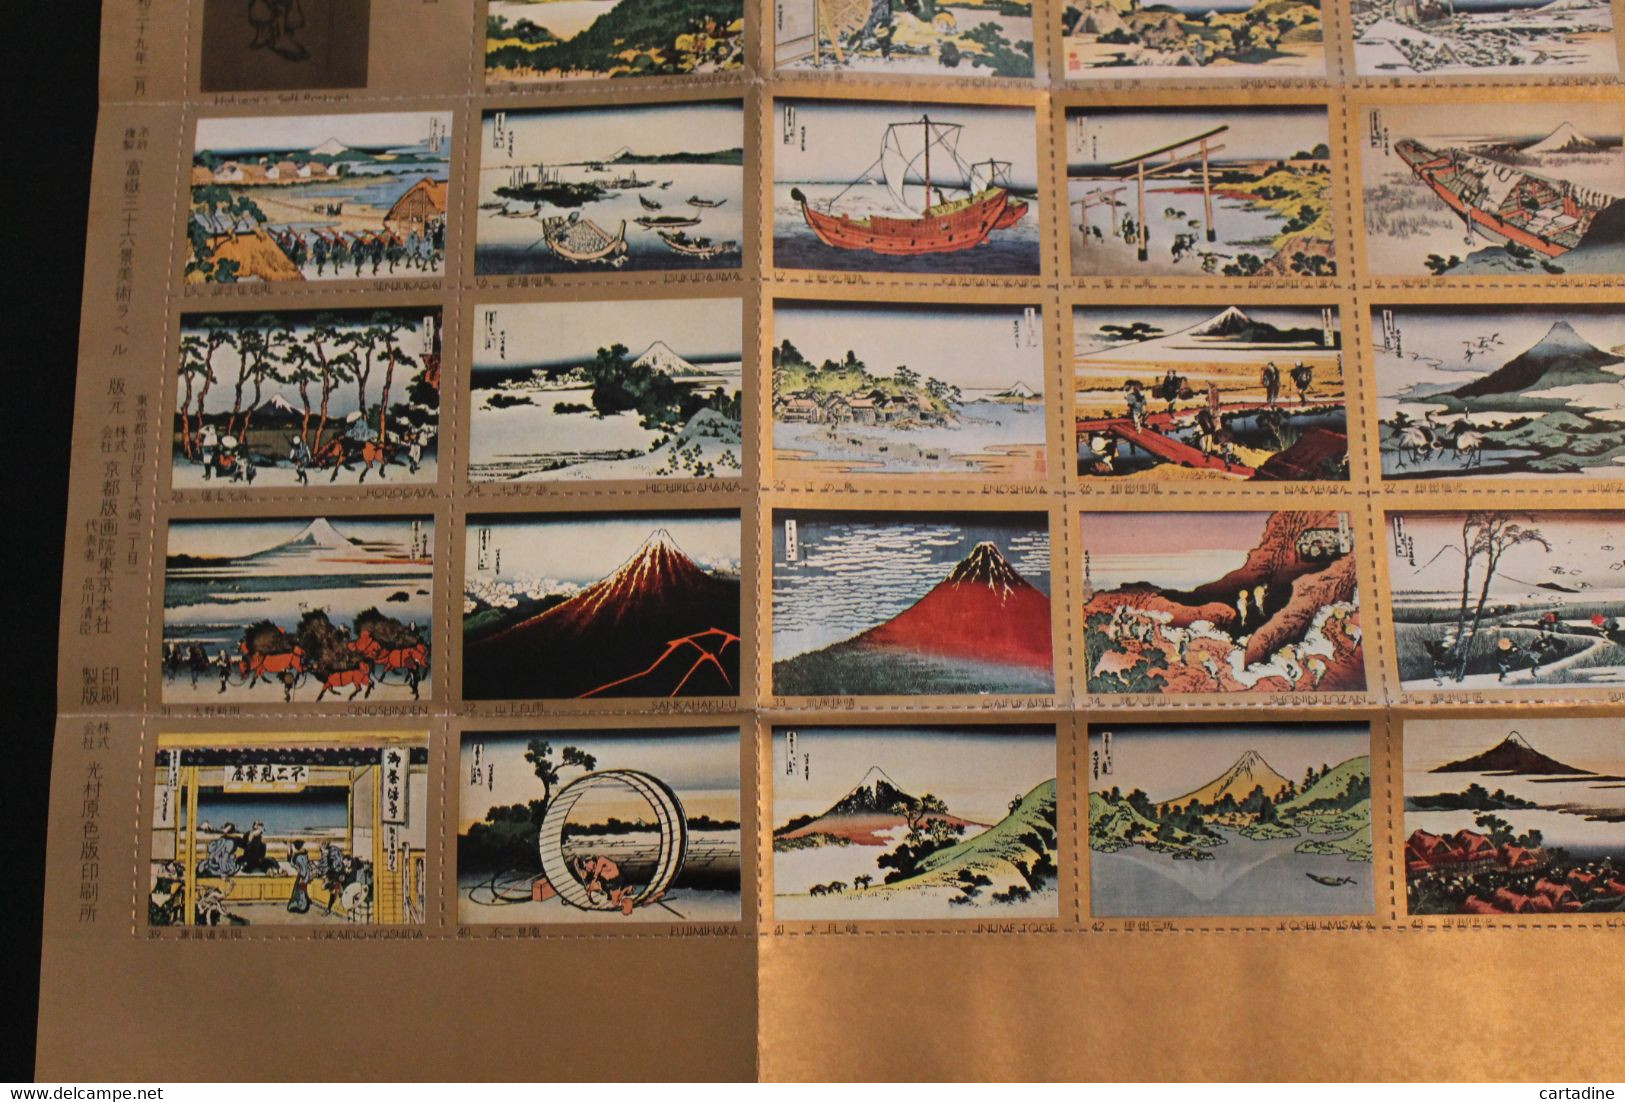 46 Vignettes Neuves du Japon Mont Fuji - Japan - The 46 Views of Mount FUJI by Katsushika Hokusai